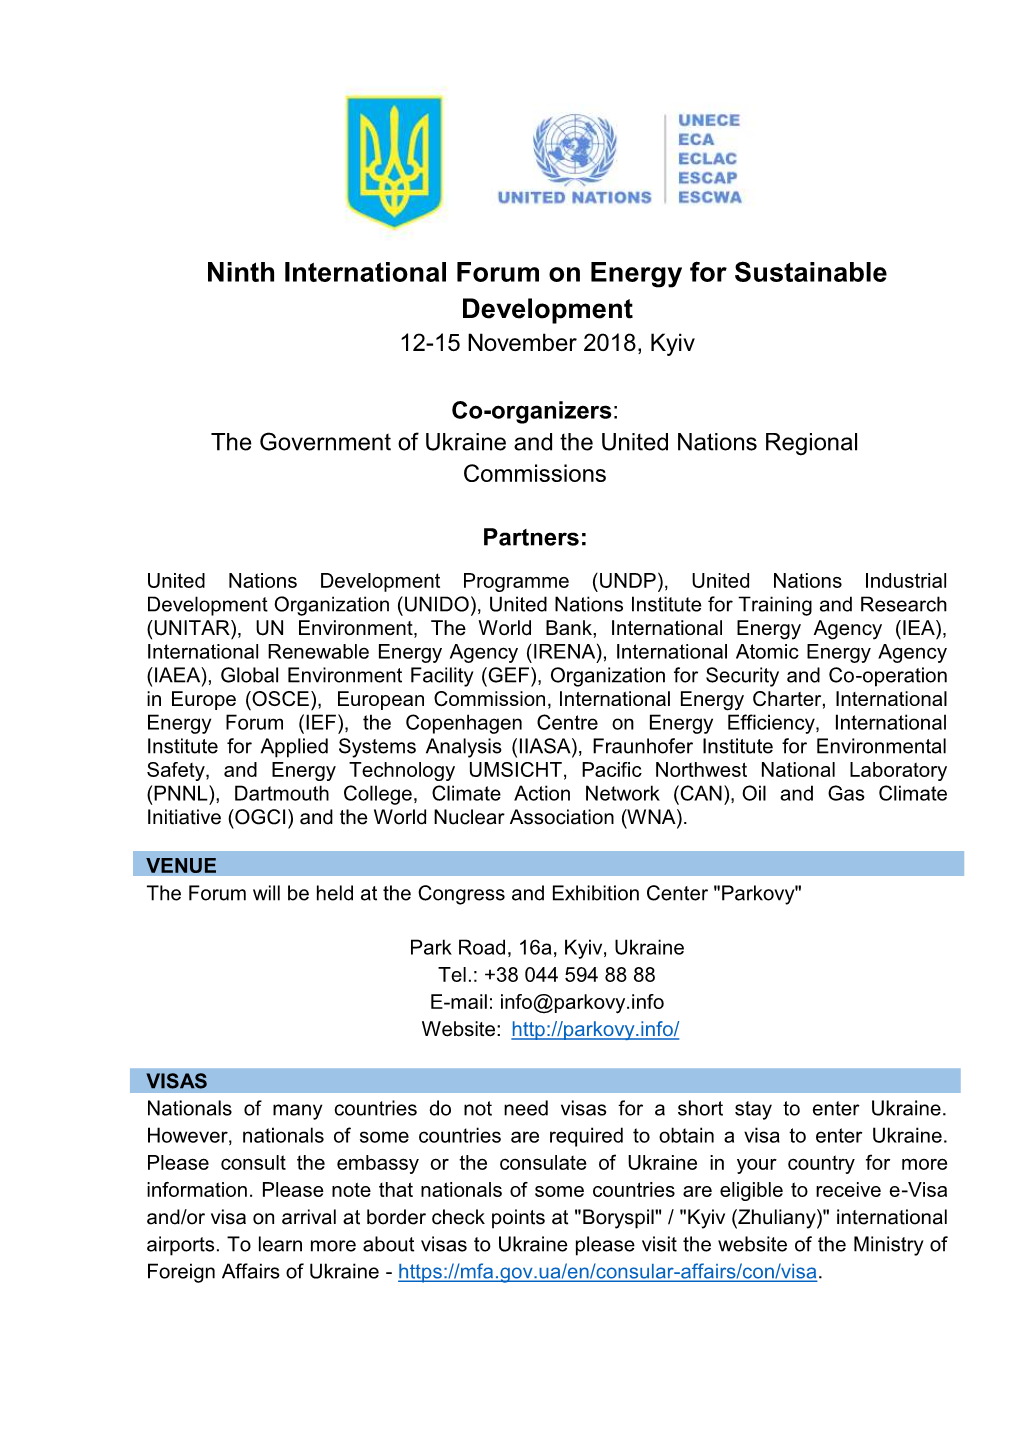 Ninth International Forum on Energy for Sustainable Development 12-15 November 2018, Kyiv